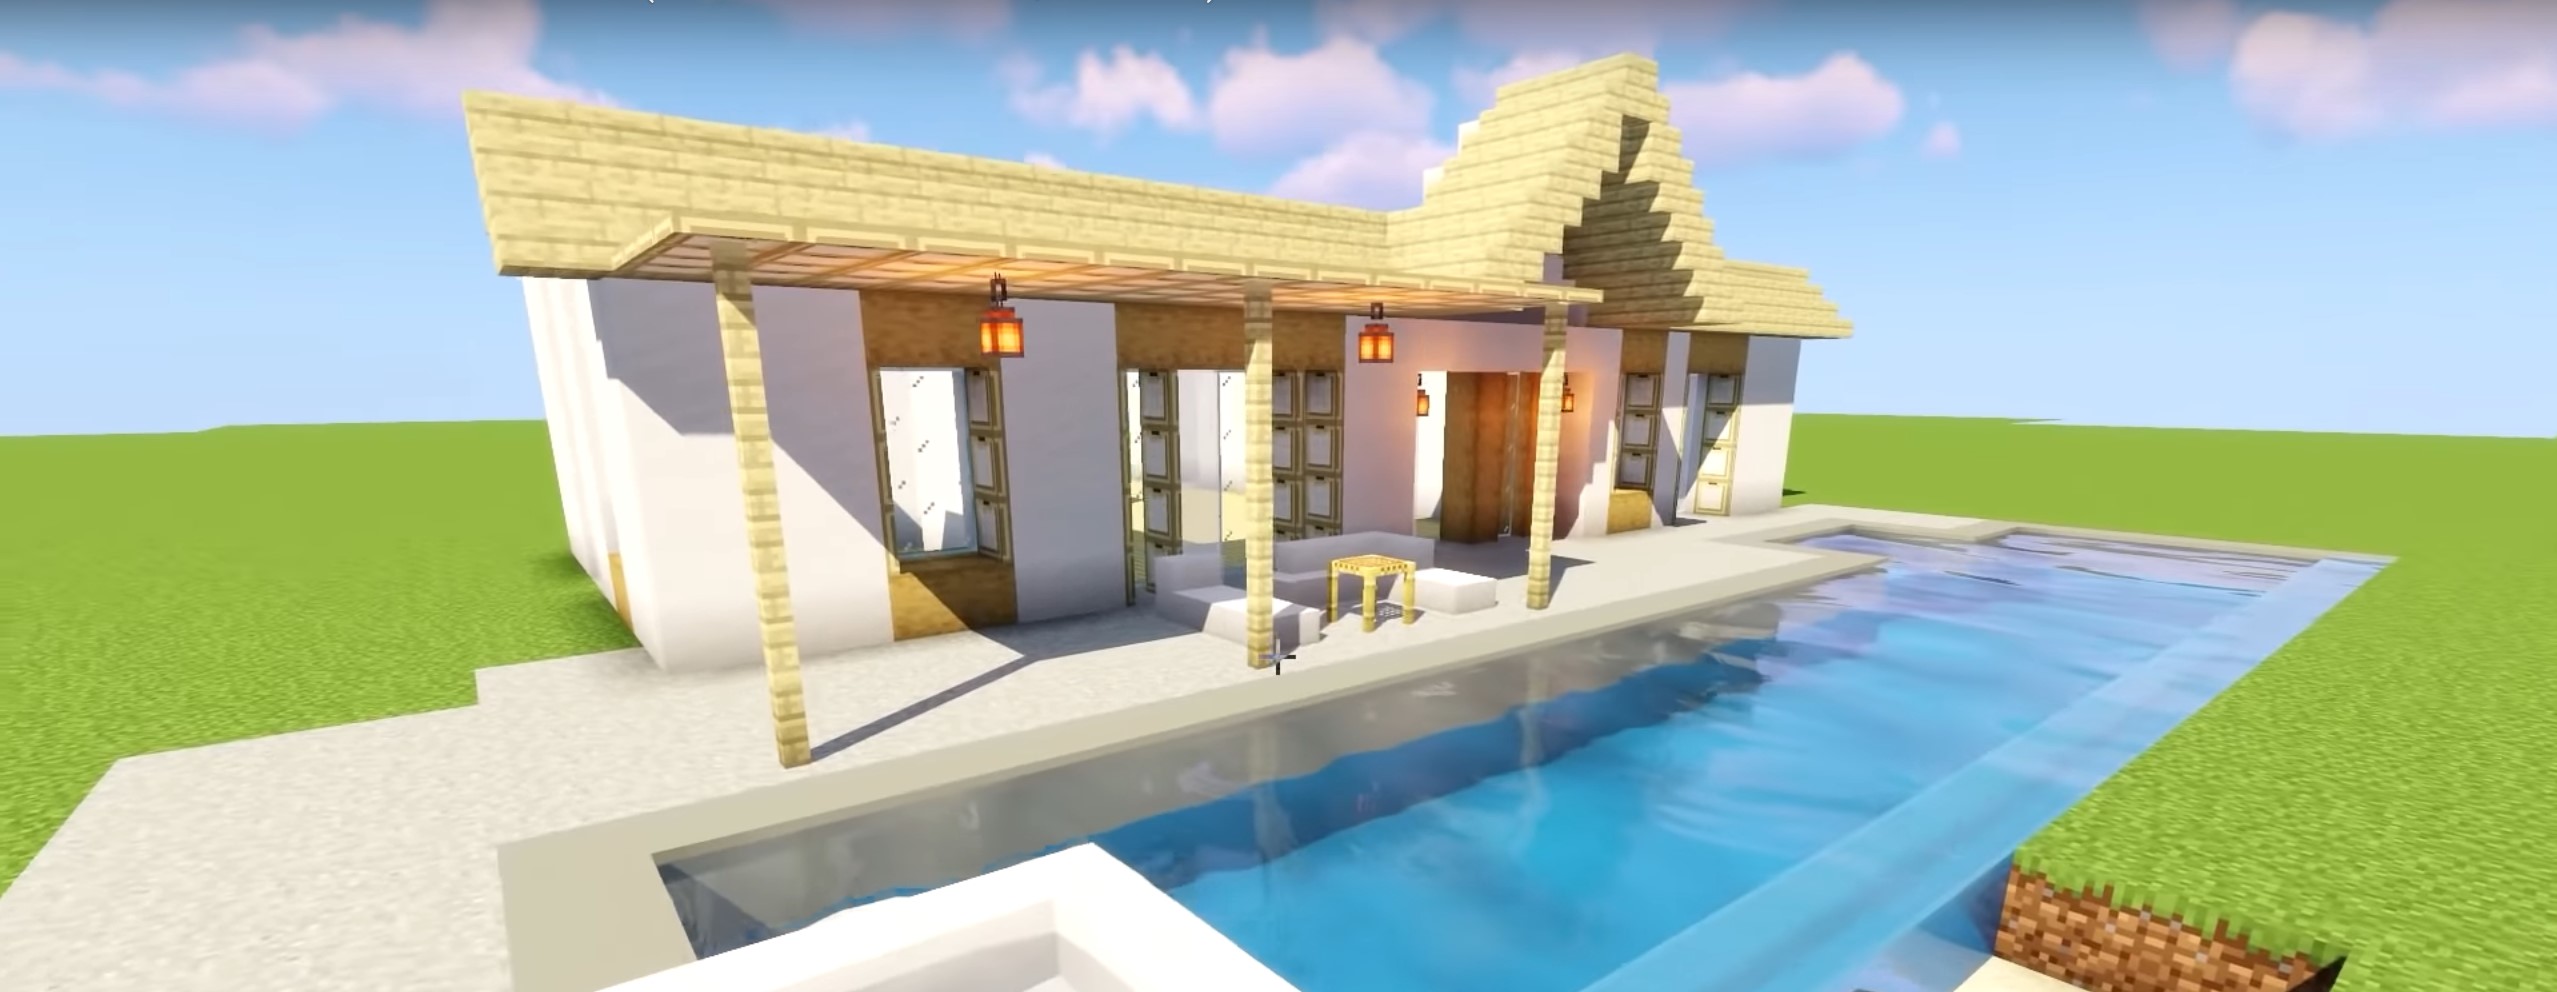 Cool Minecraft Beach House ideas